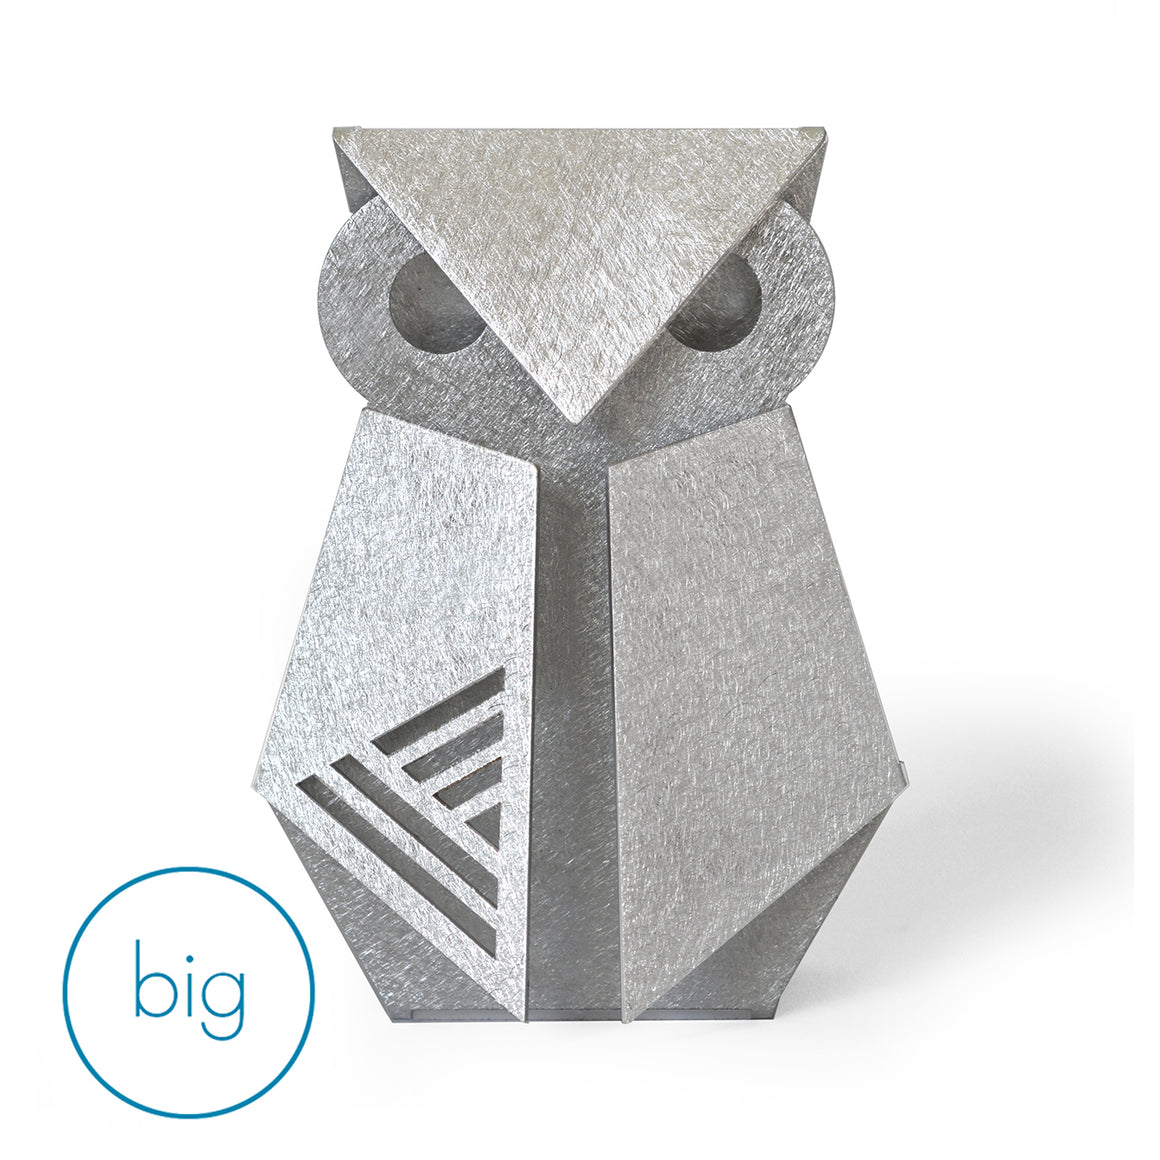 wise owl modern geometric figurine